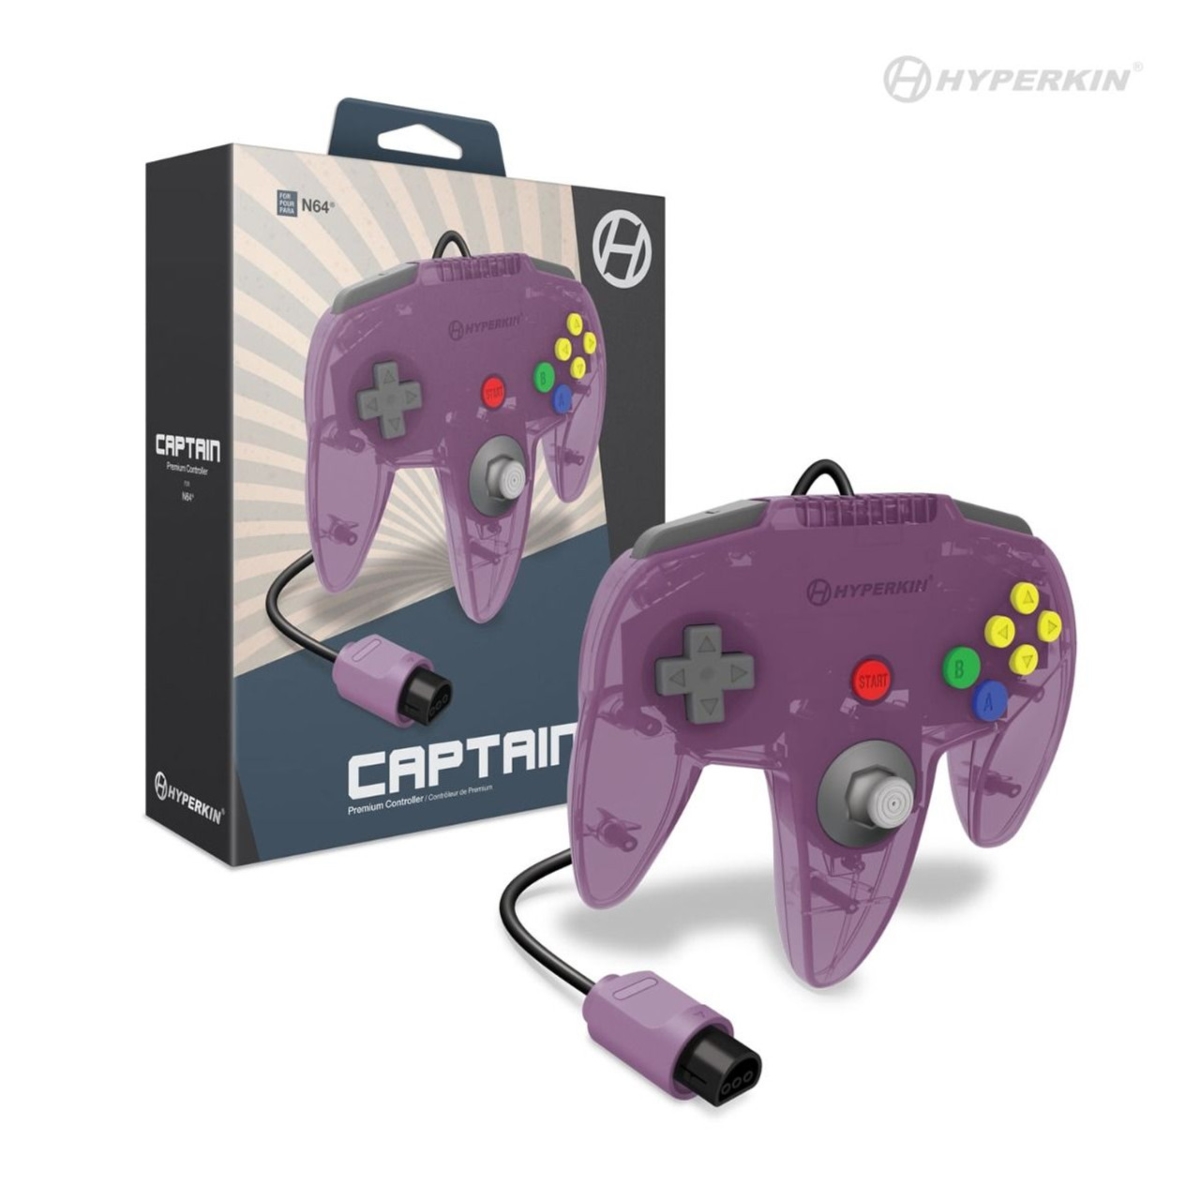 Picture of Hyperkin M07260-AP Captain Premium Controller for N64 Amethyst, Purple